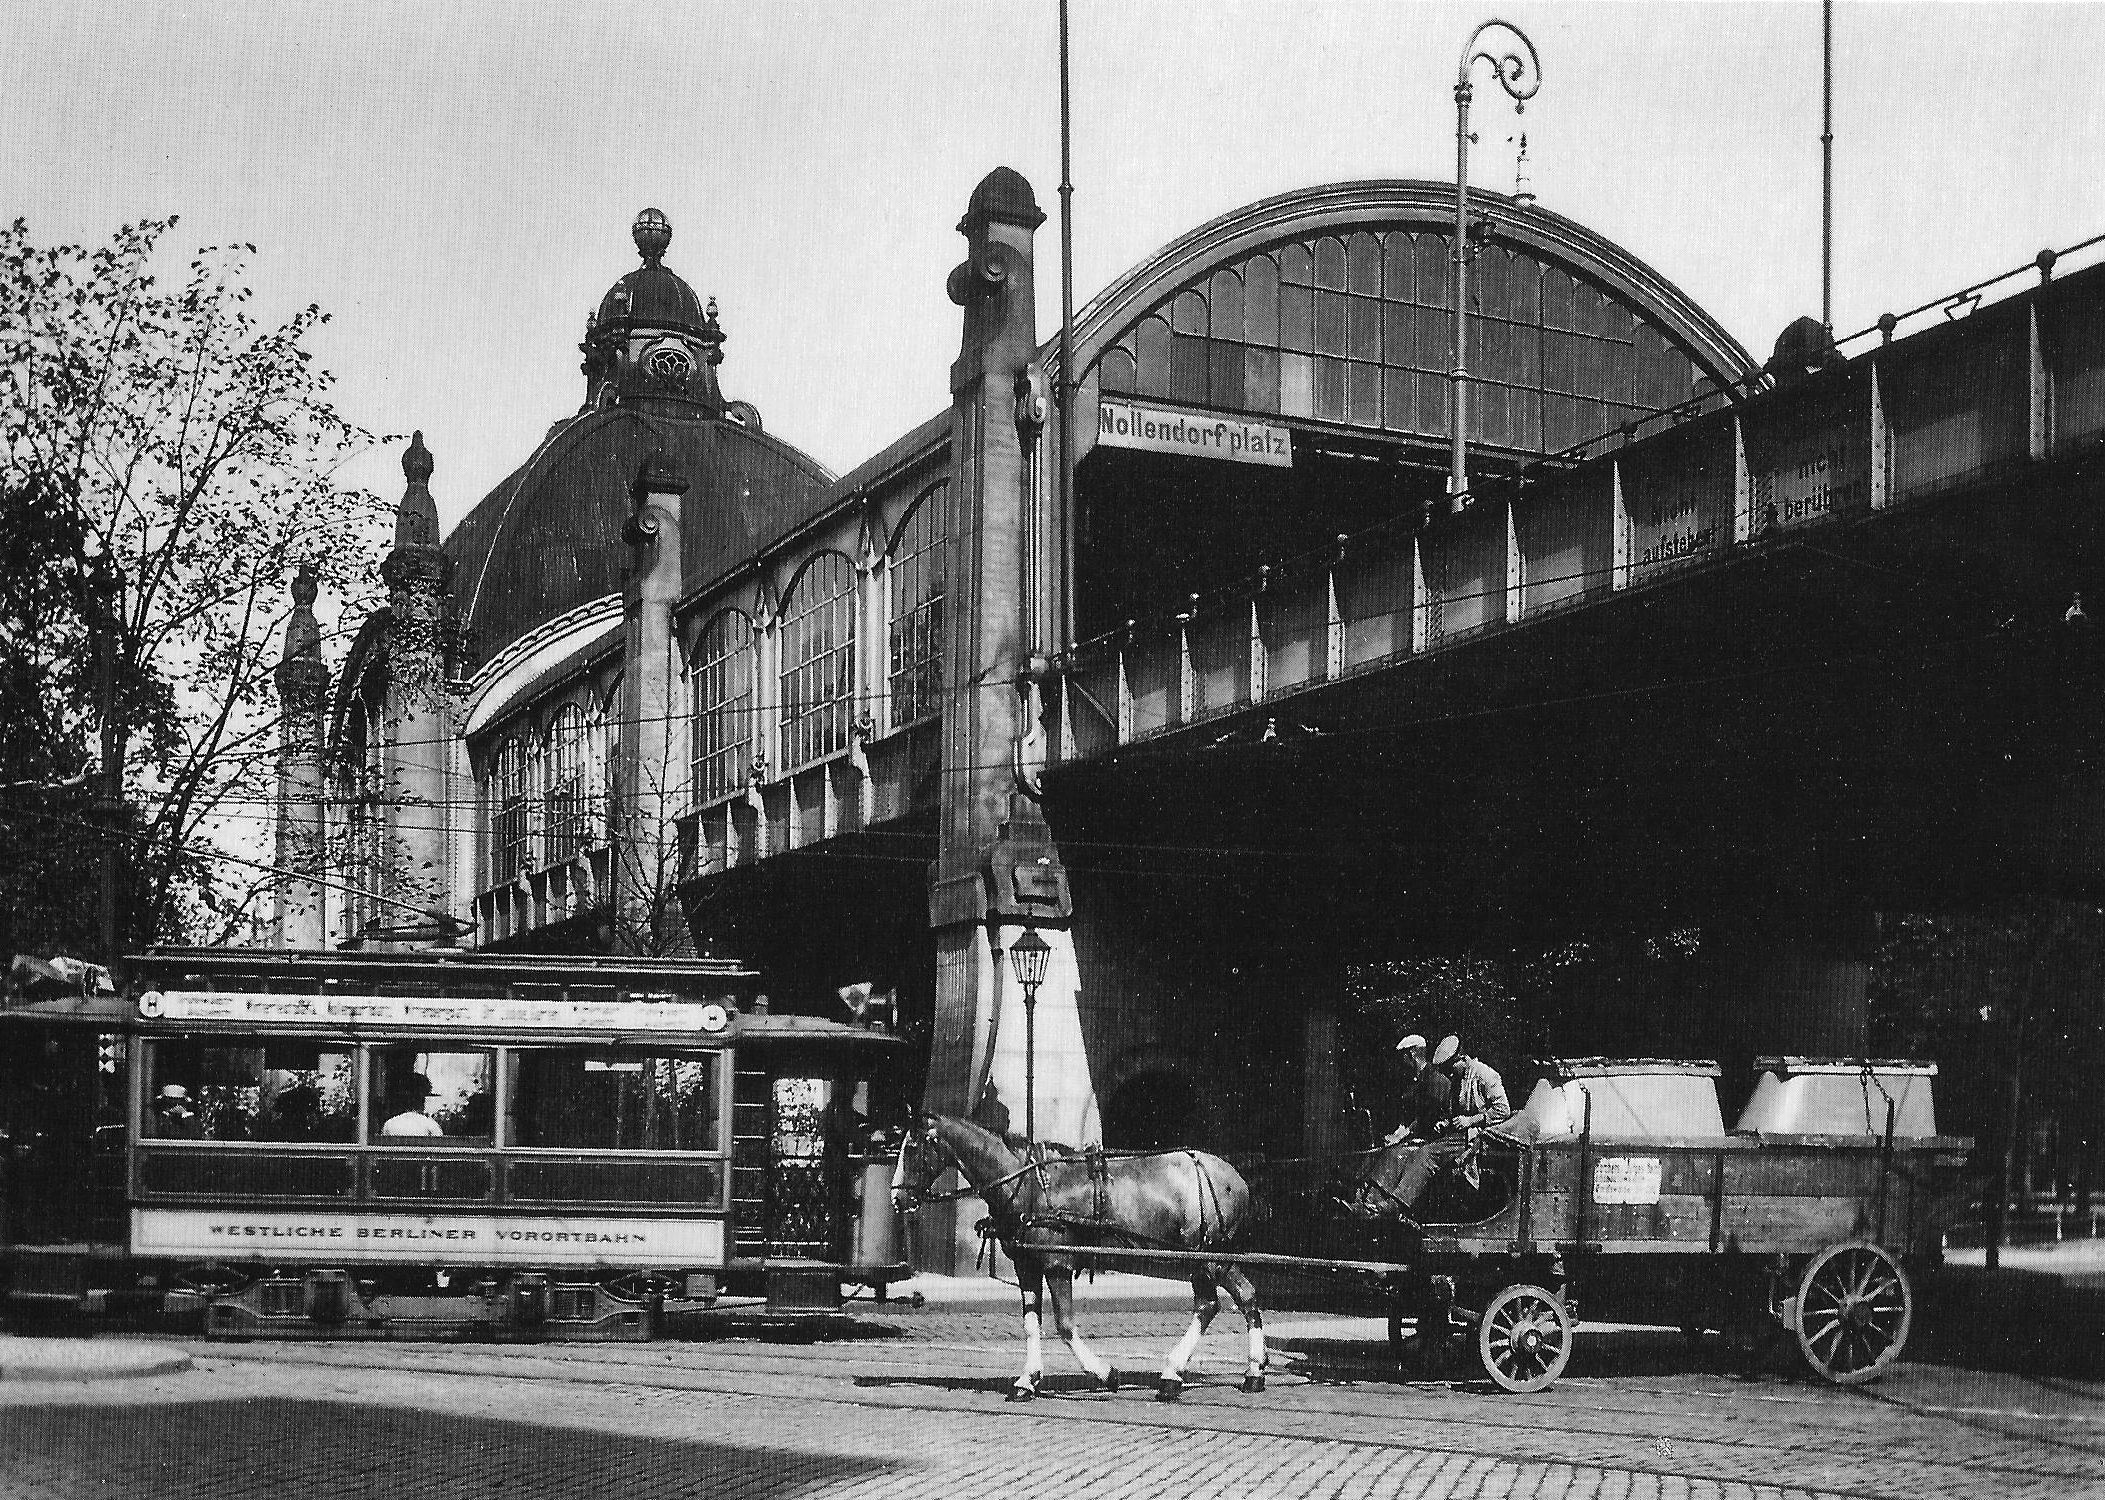 Nollendorfplatz Ubahn station, Berlin Germany, early 1900